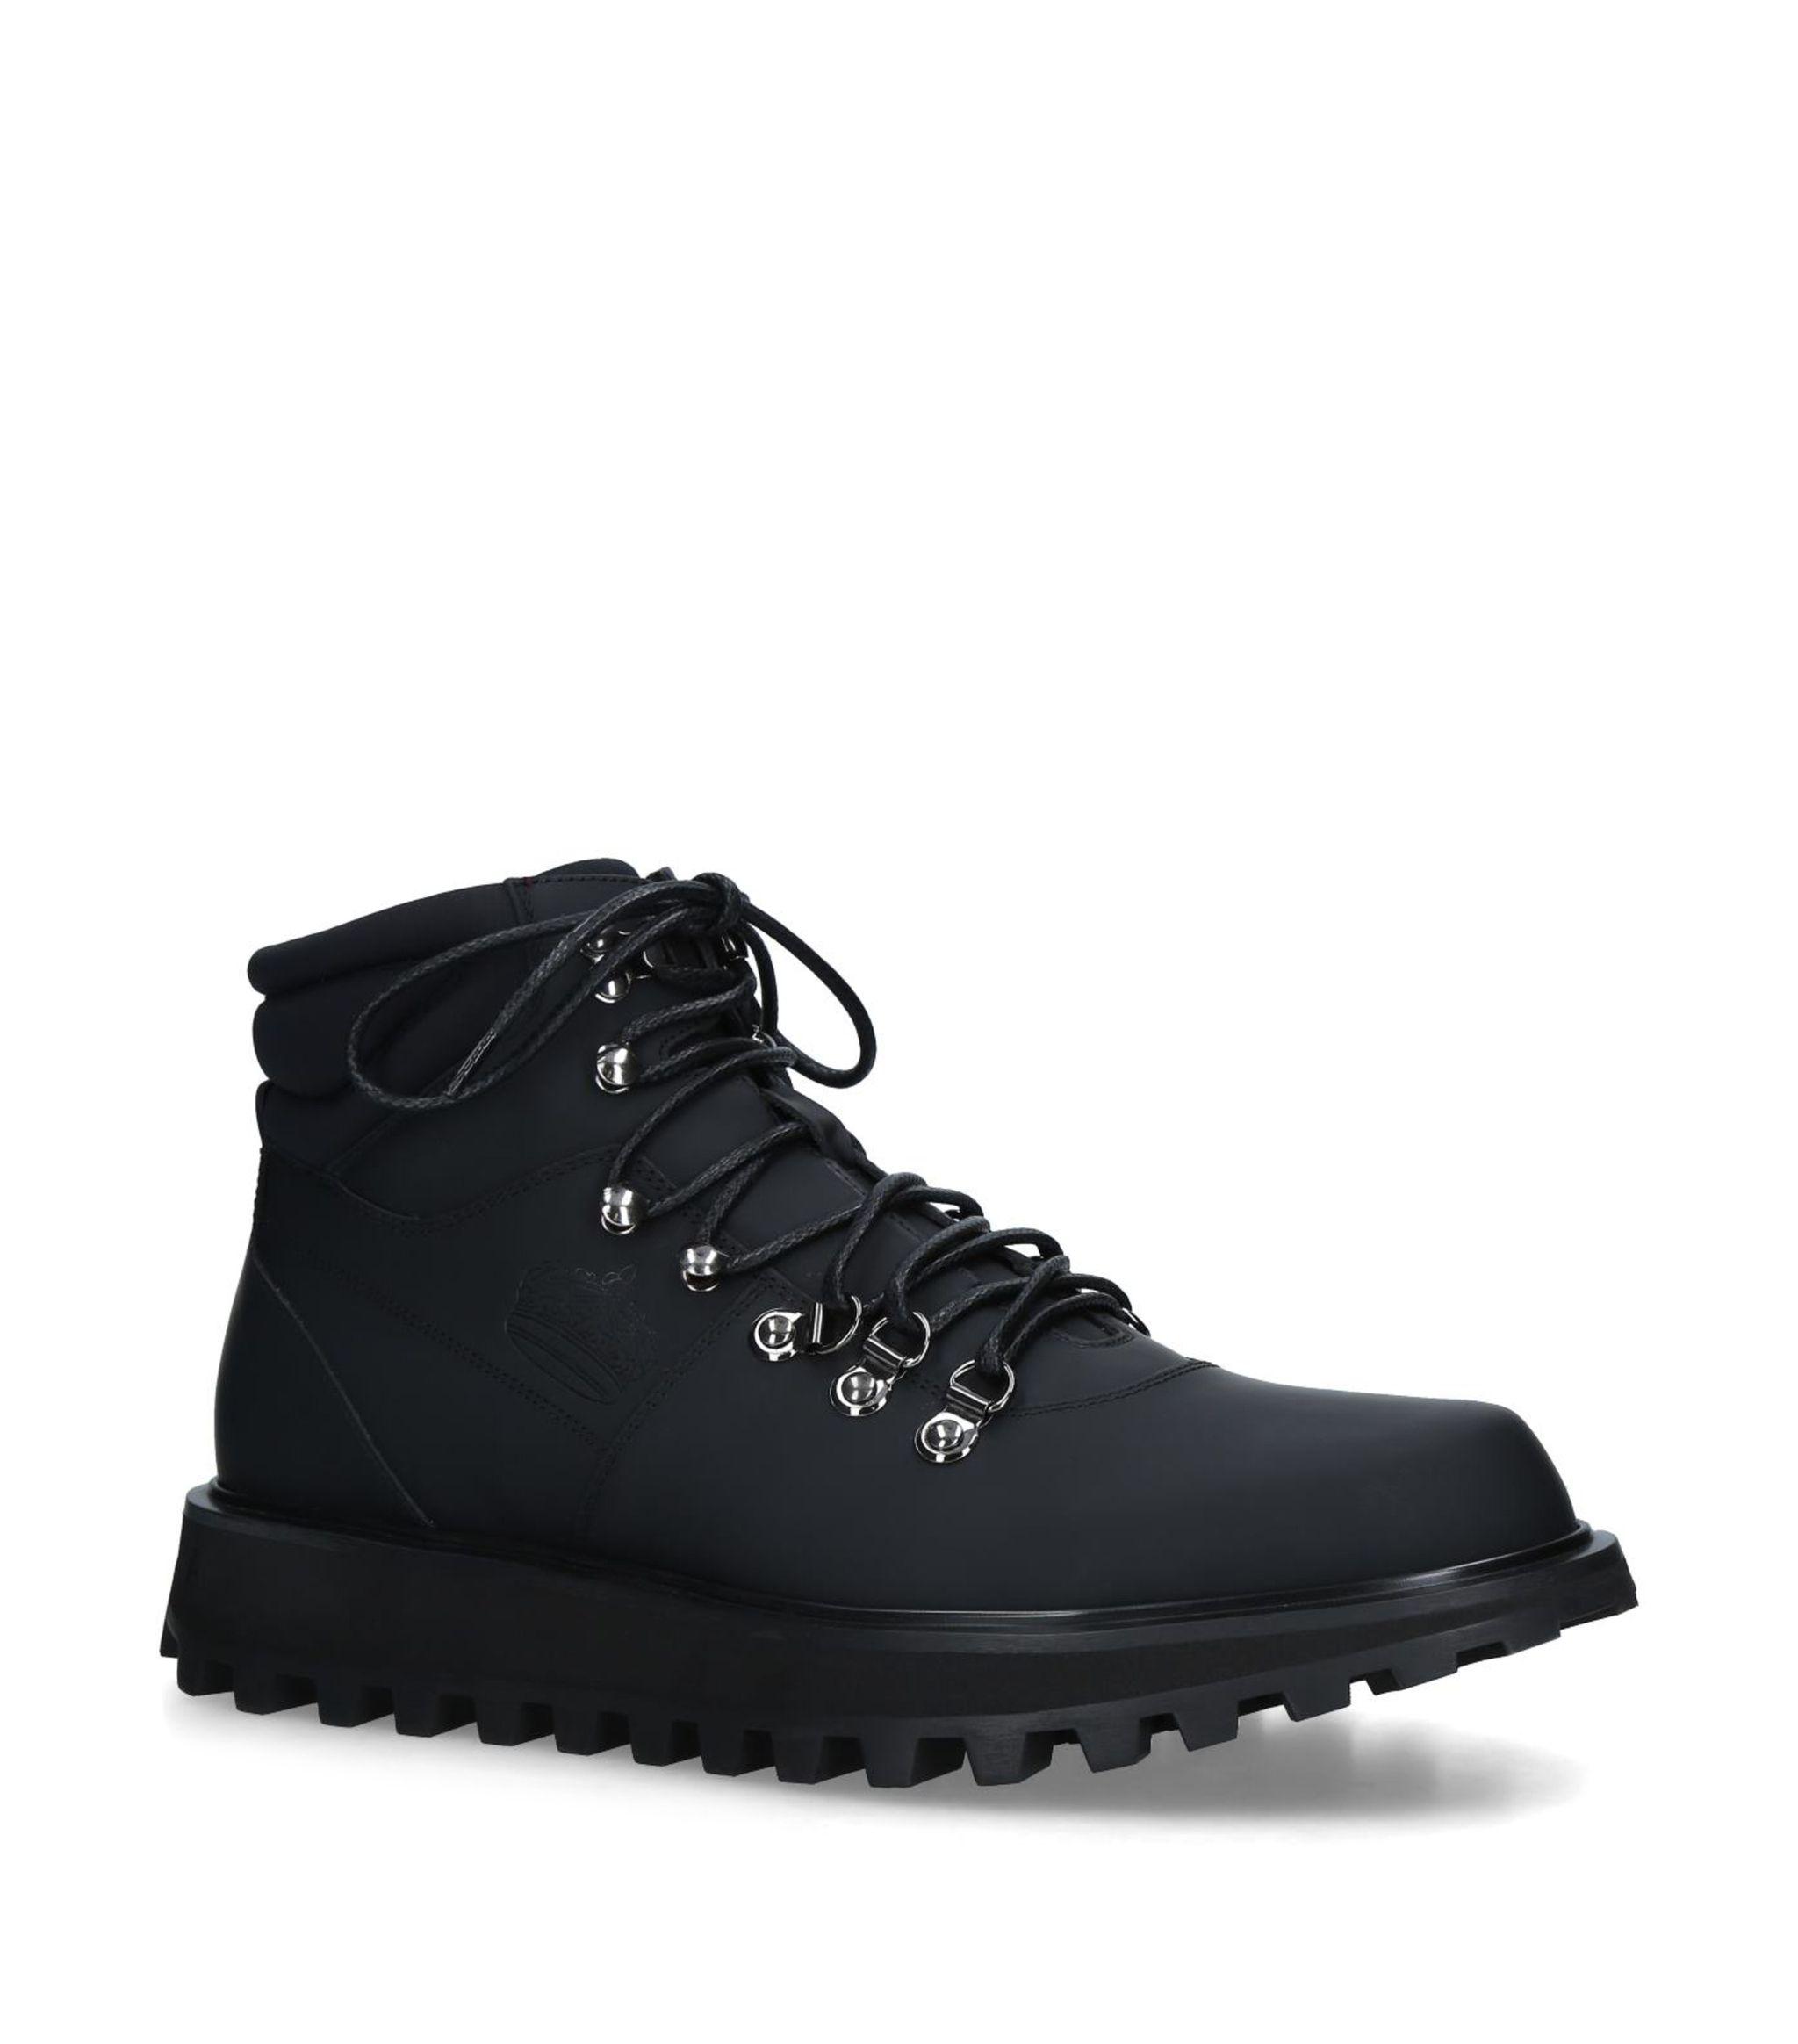 Dolce & Gabbana Leather Vulcano Trekking Boots in Black for Men - Lyst